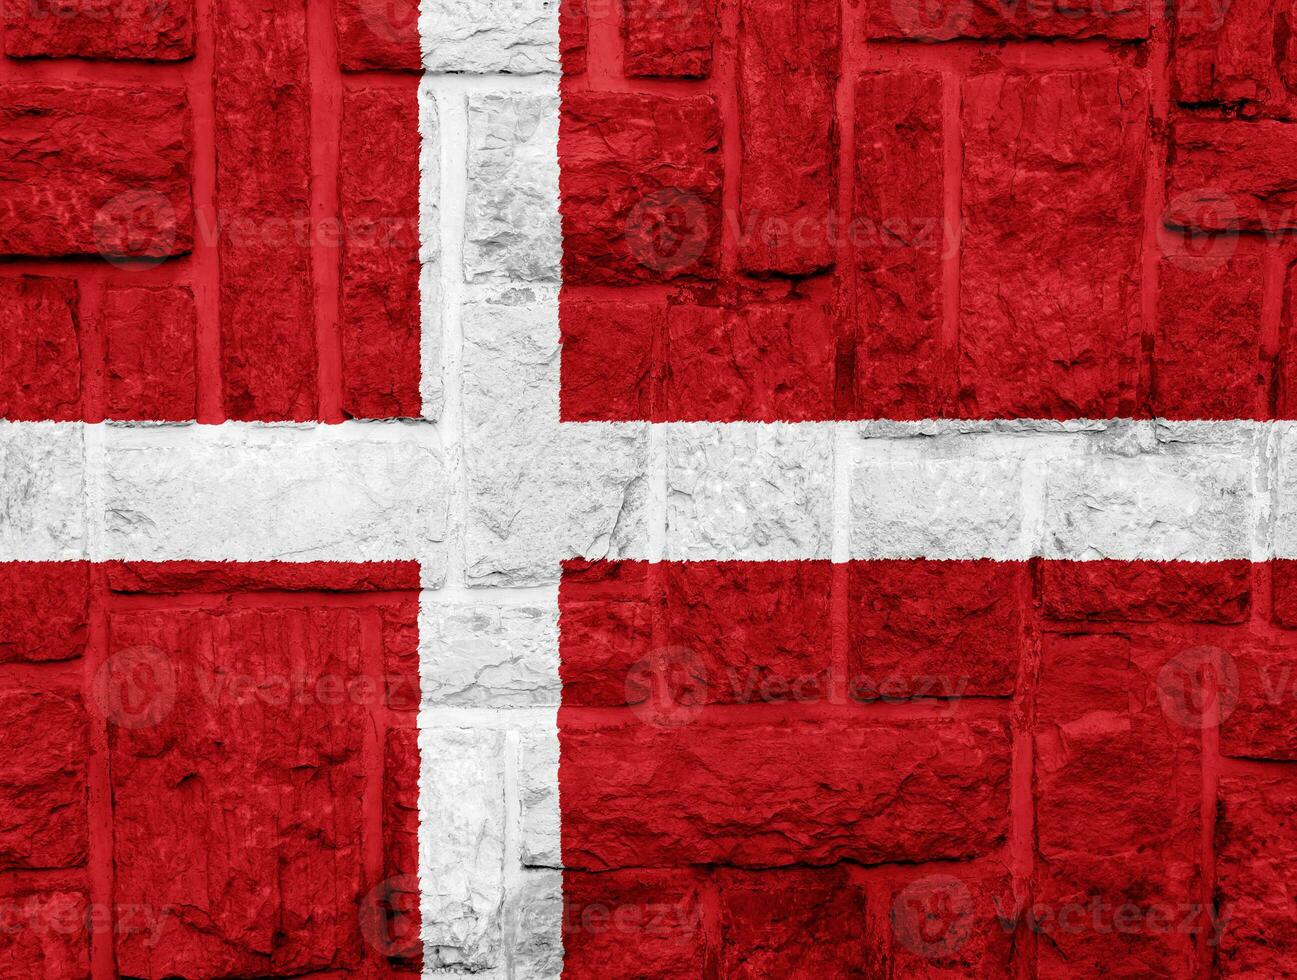 flagga av Danmark på en texturerad bakgrund. begrepp collage. foto